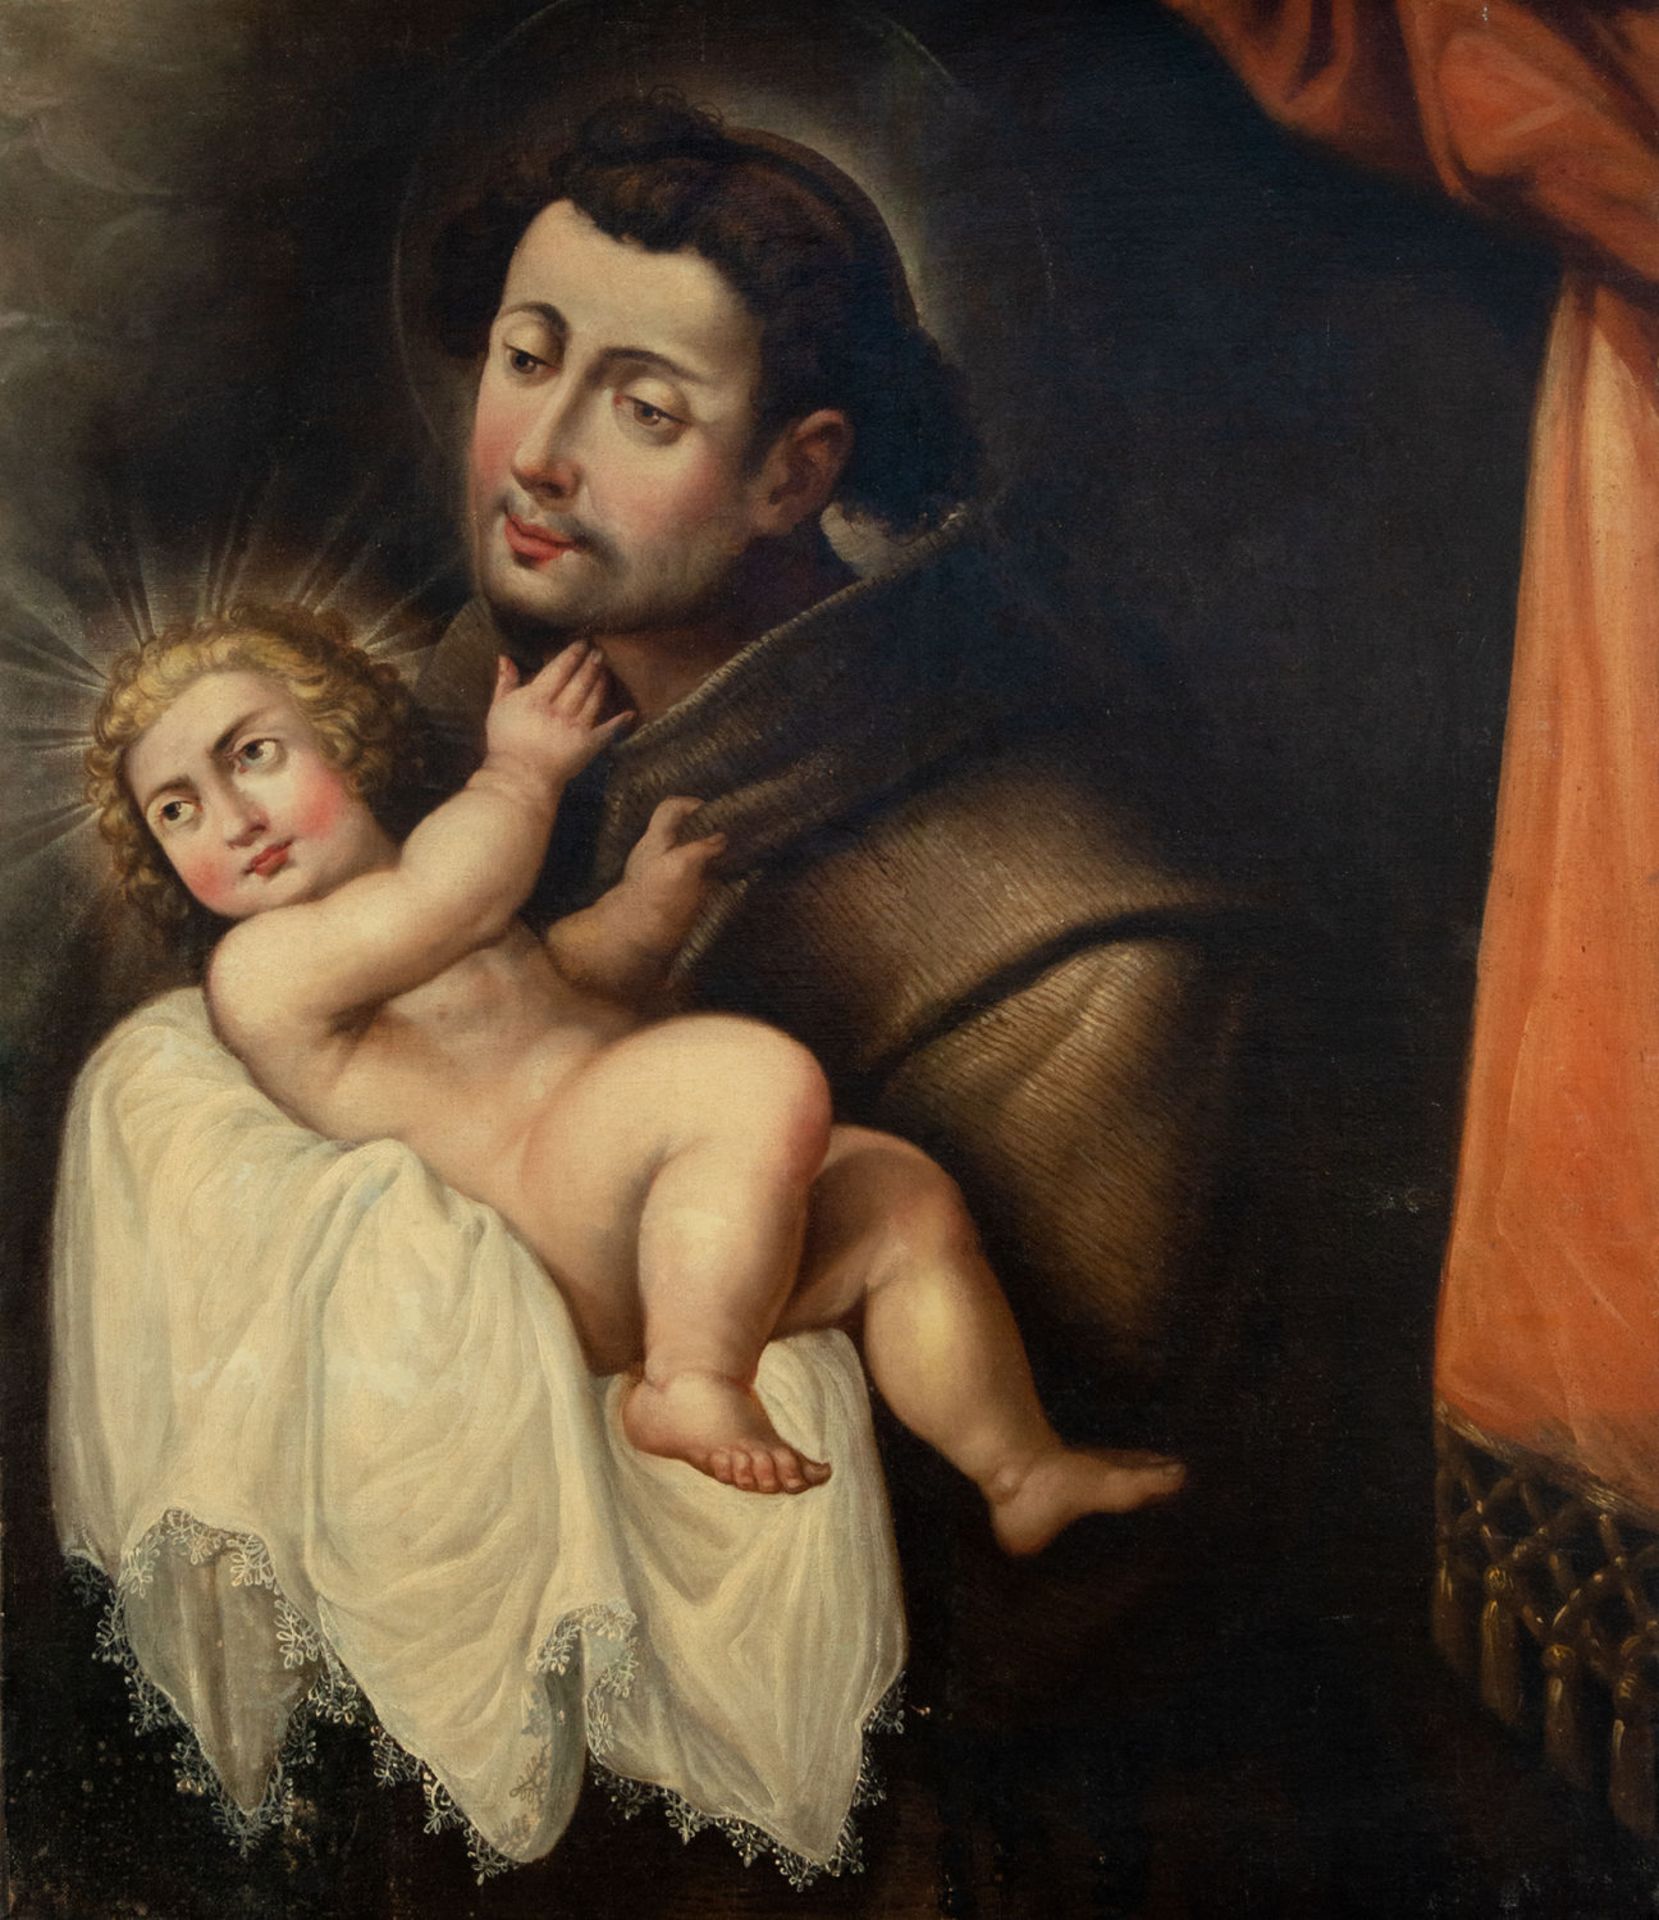 Saint Anthony with the Child, 18th century Italian school